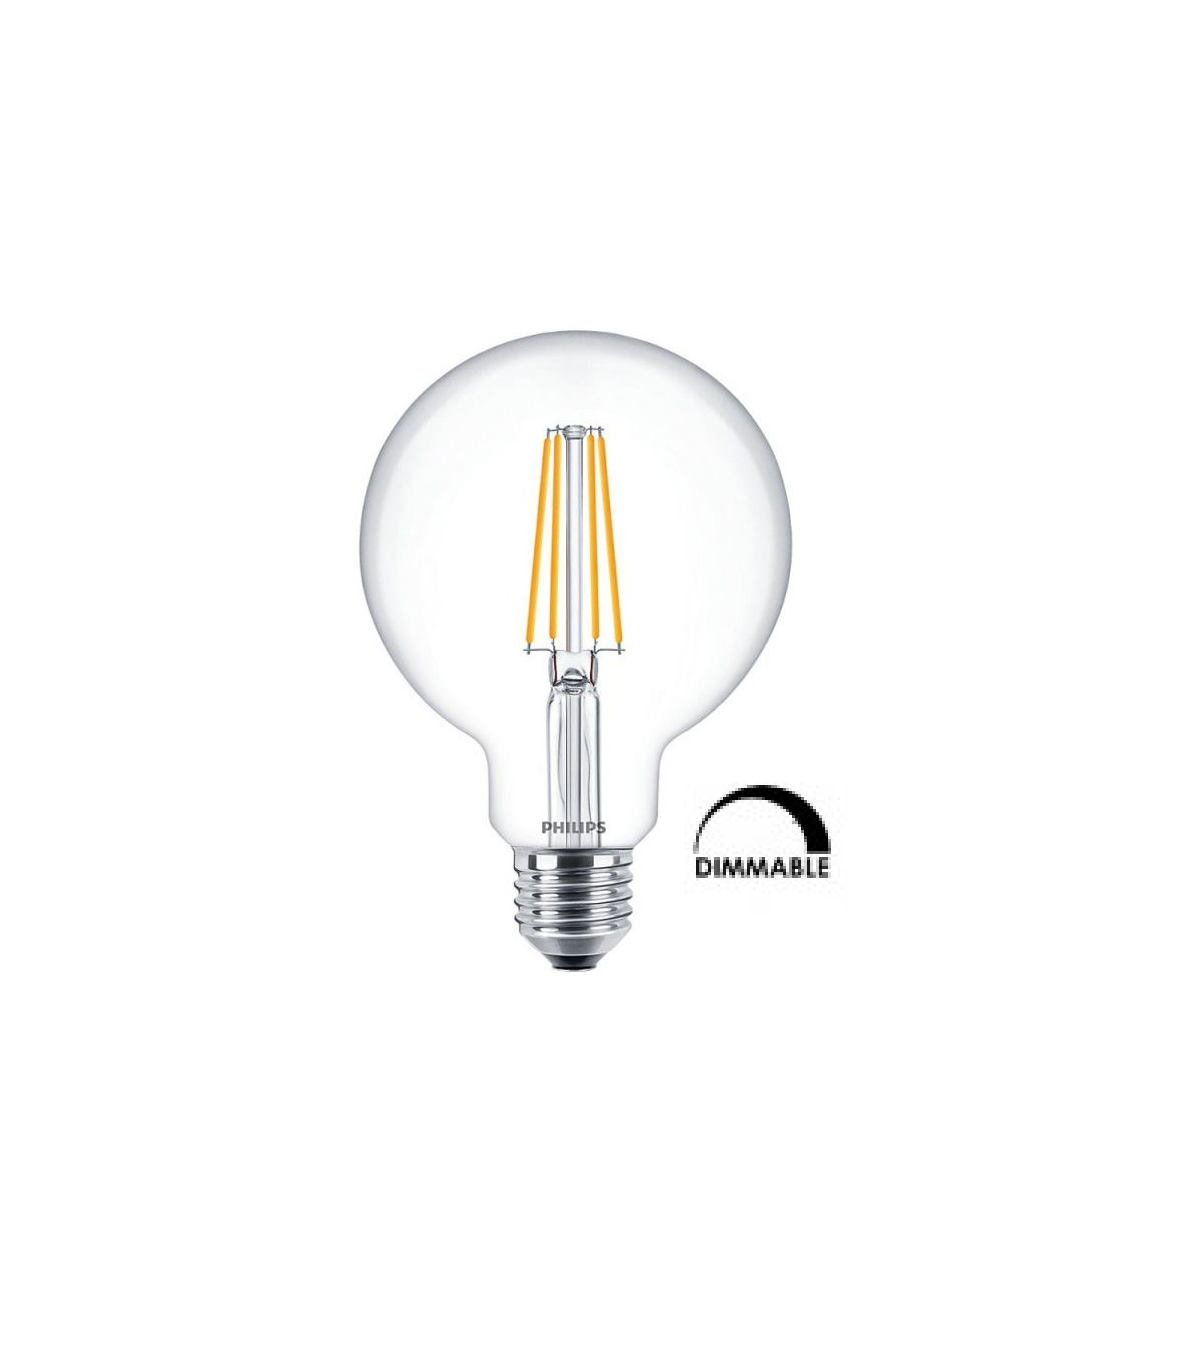 E27 Ampoule led standard LED 13w=100w 4000K /840 230v PHILIP